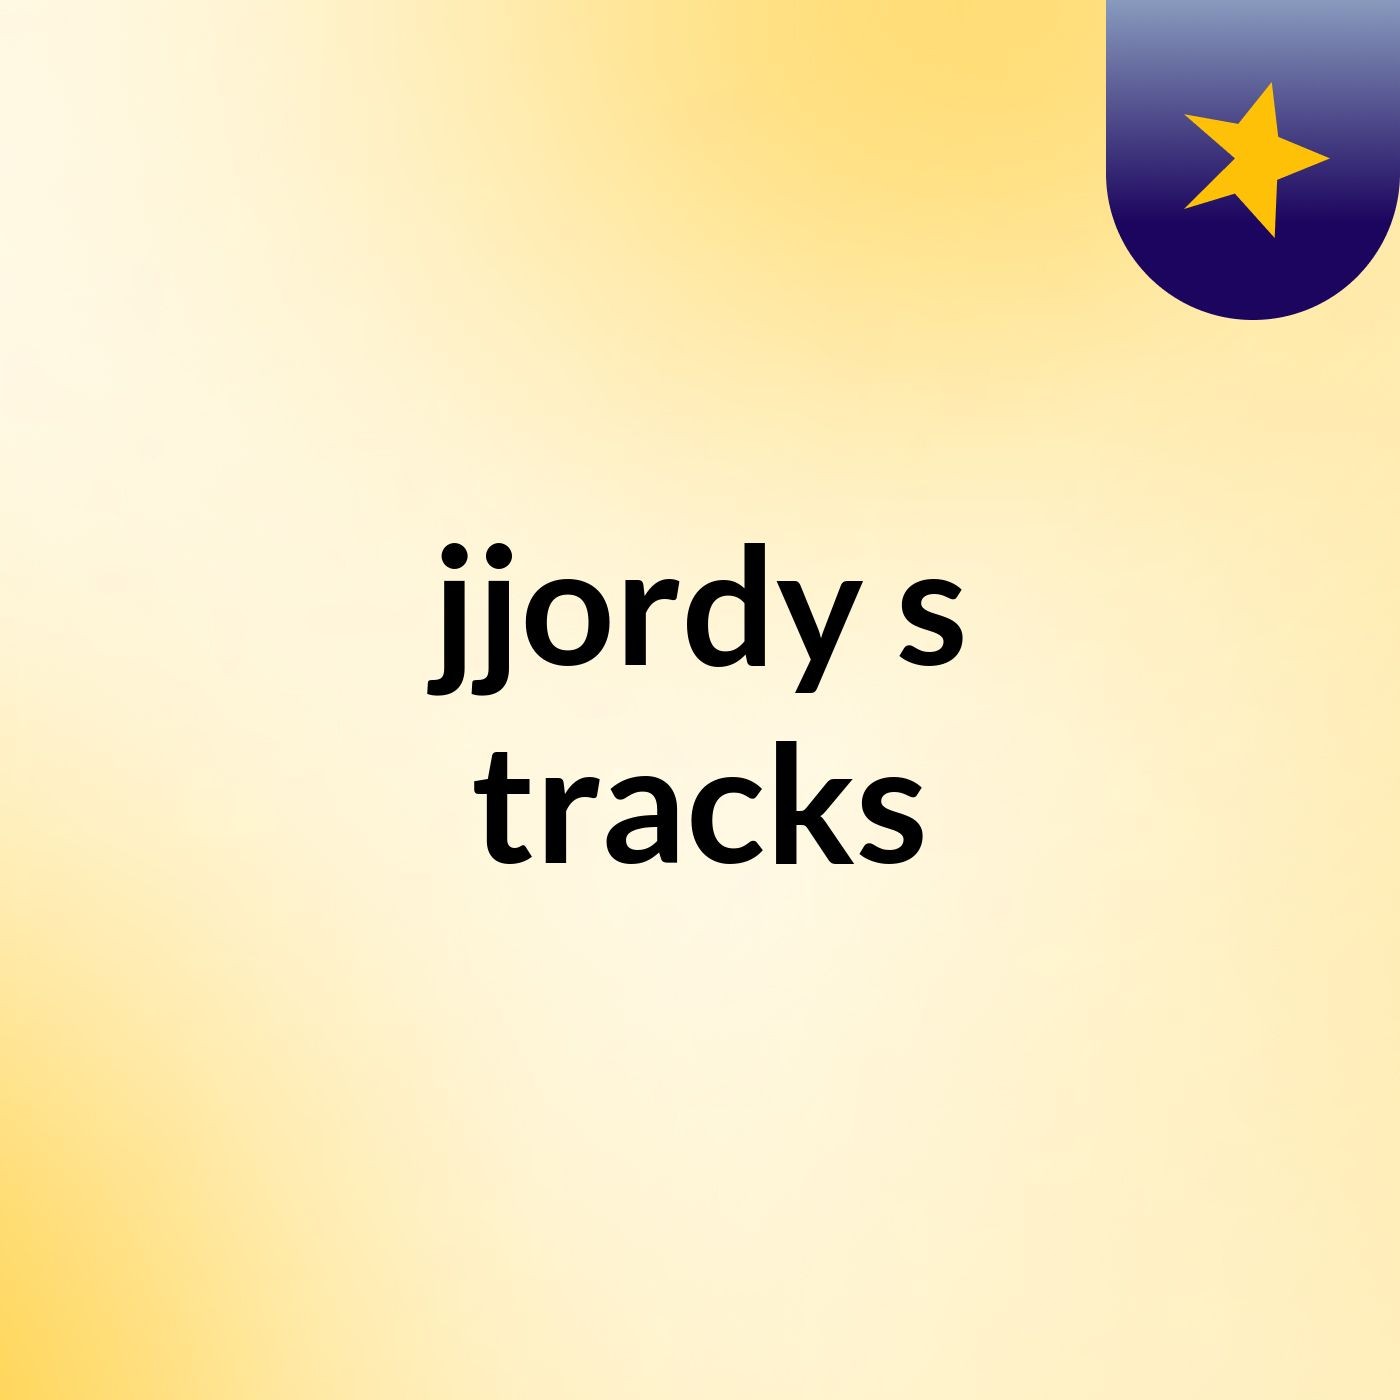 jjordy's tracks